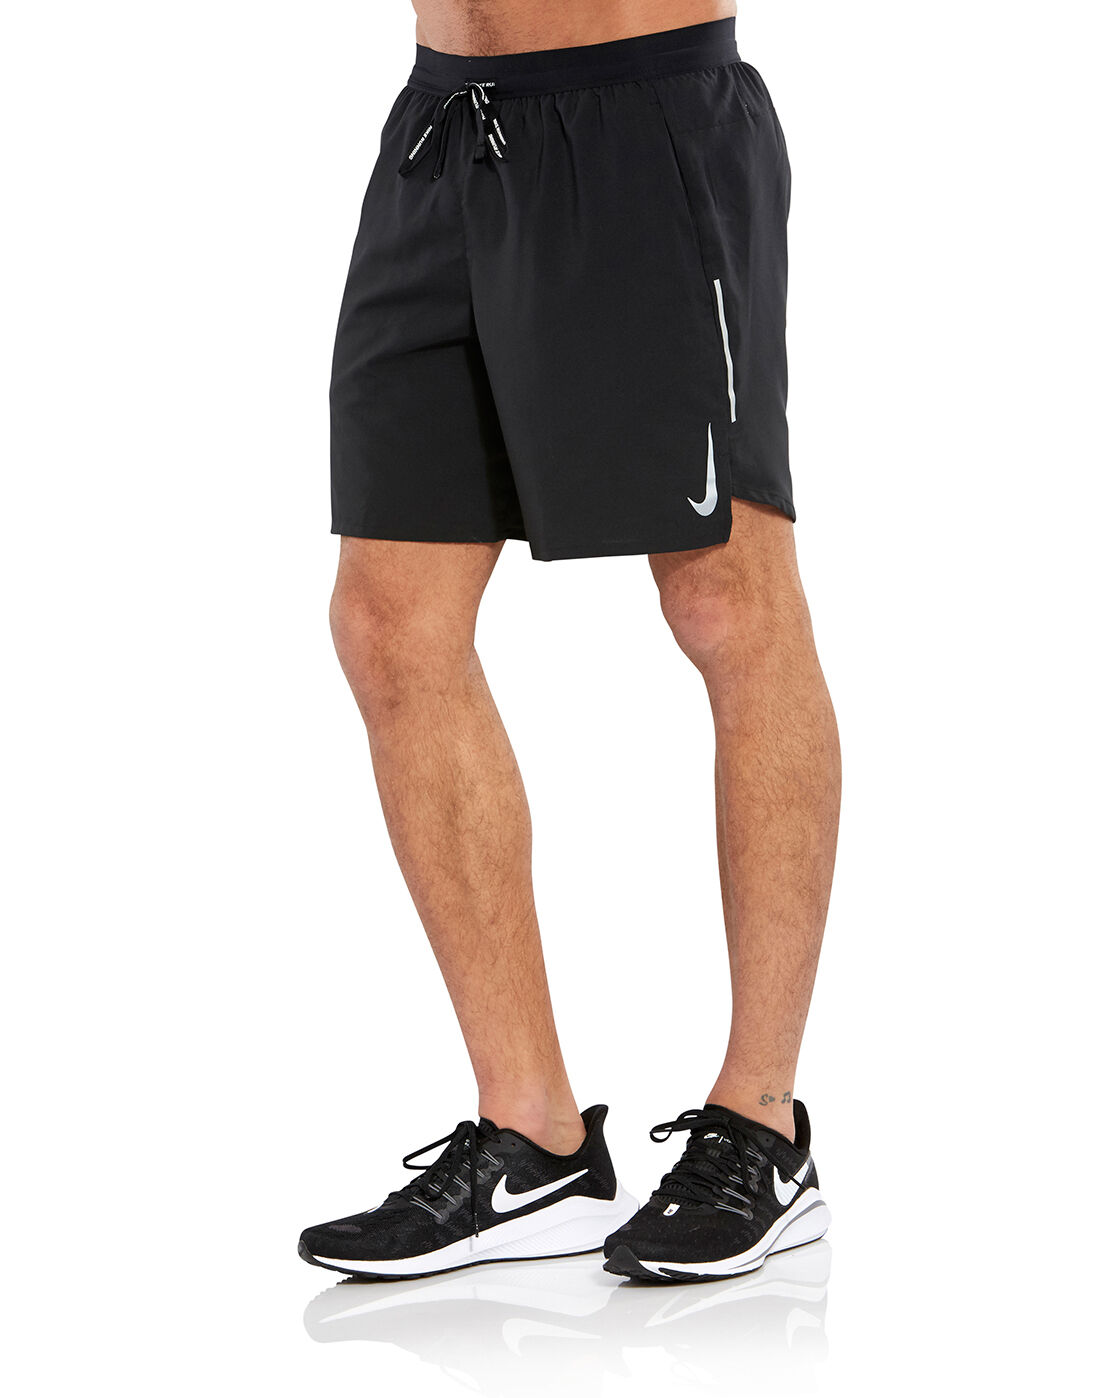 flex stride performance athletic shorts